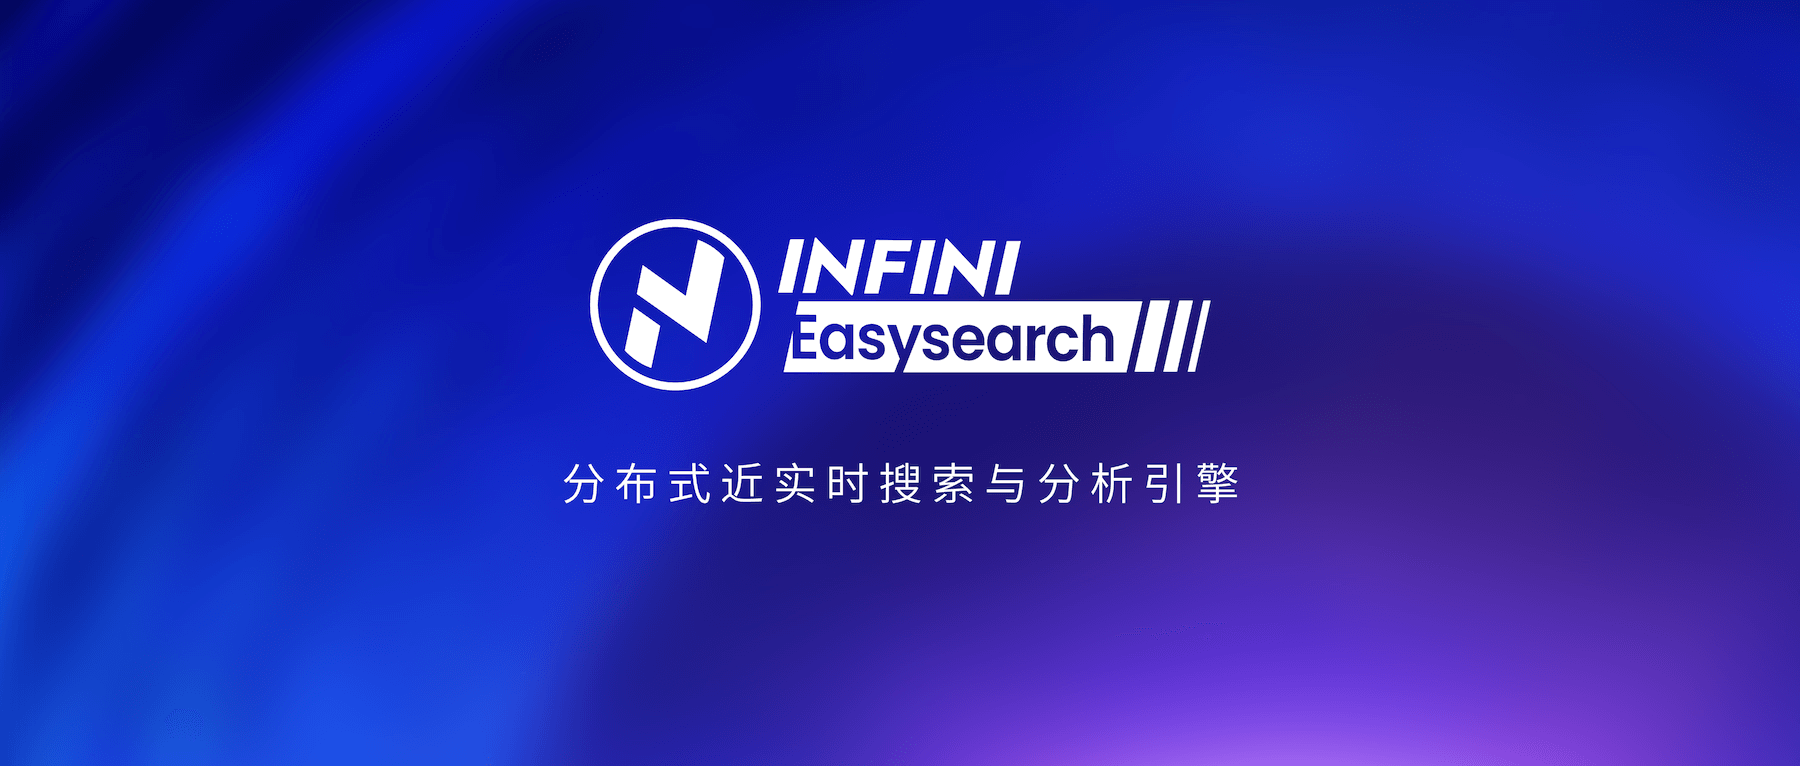 Easysearch